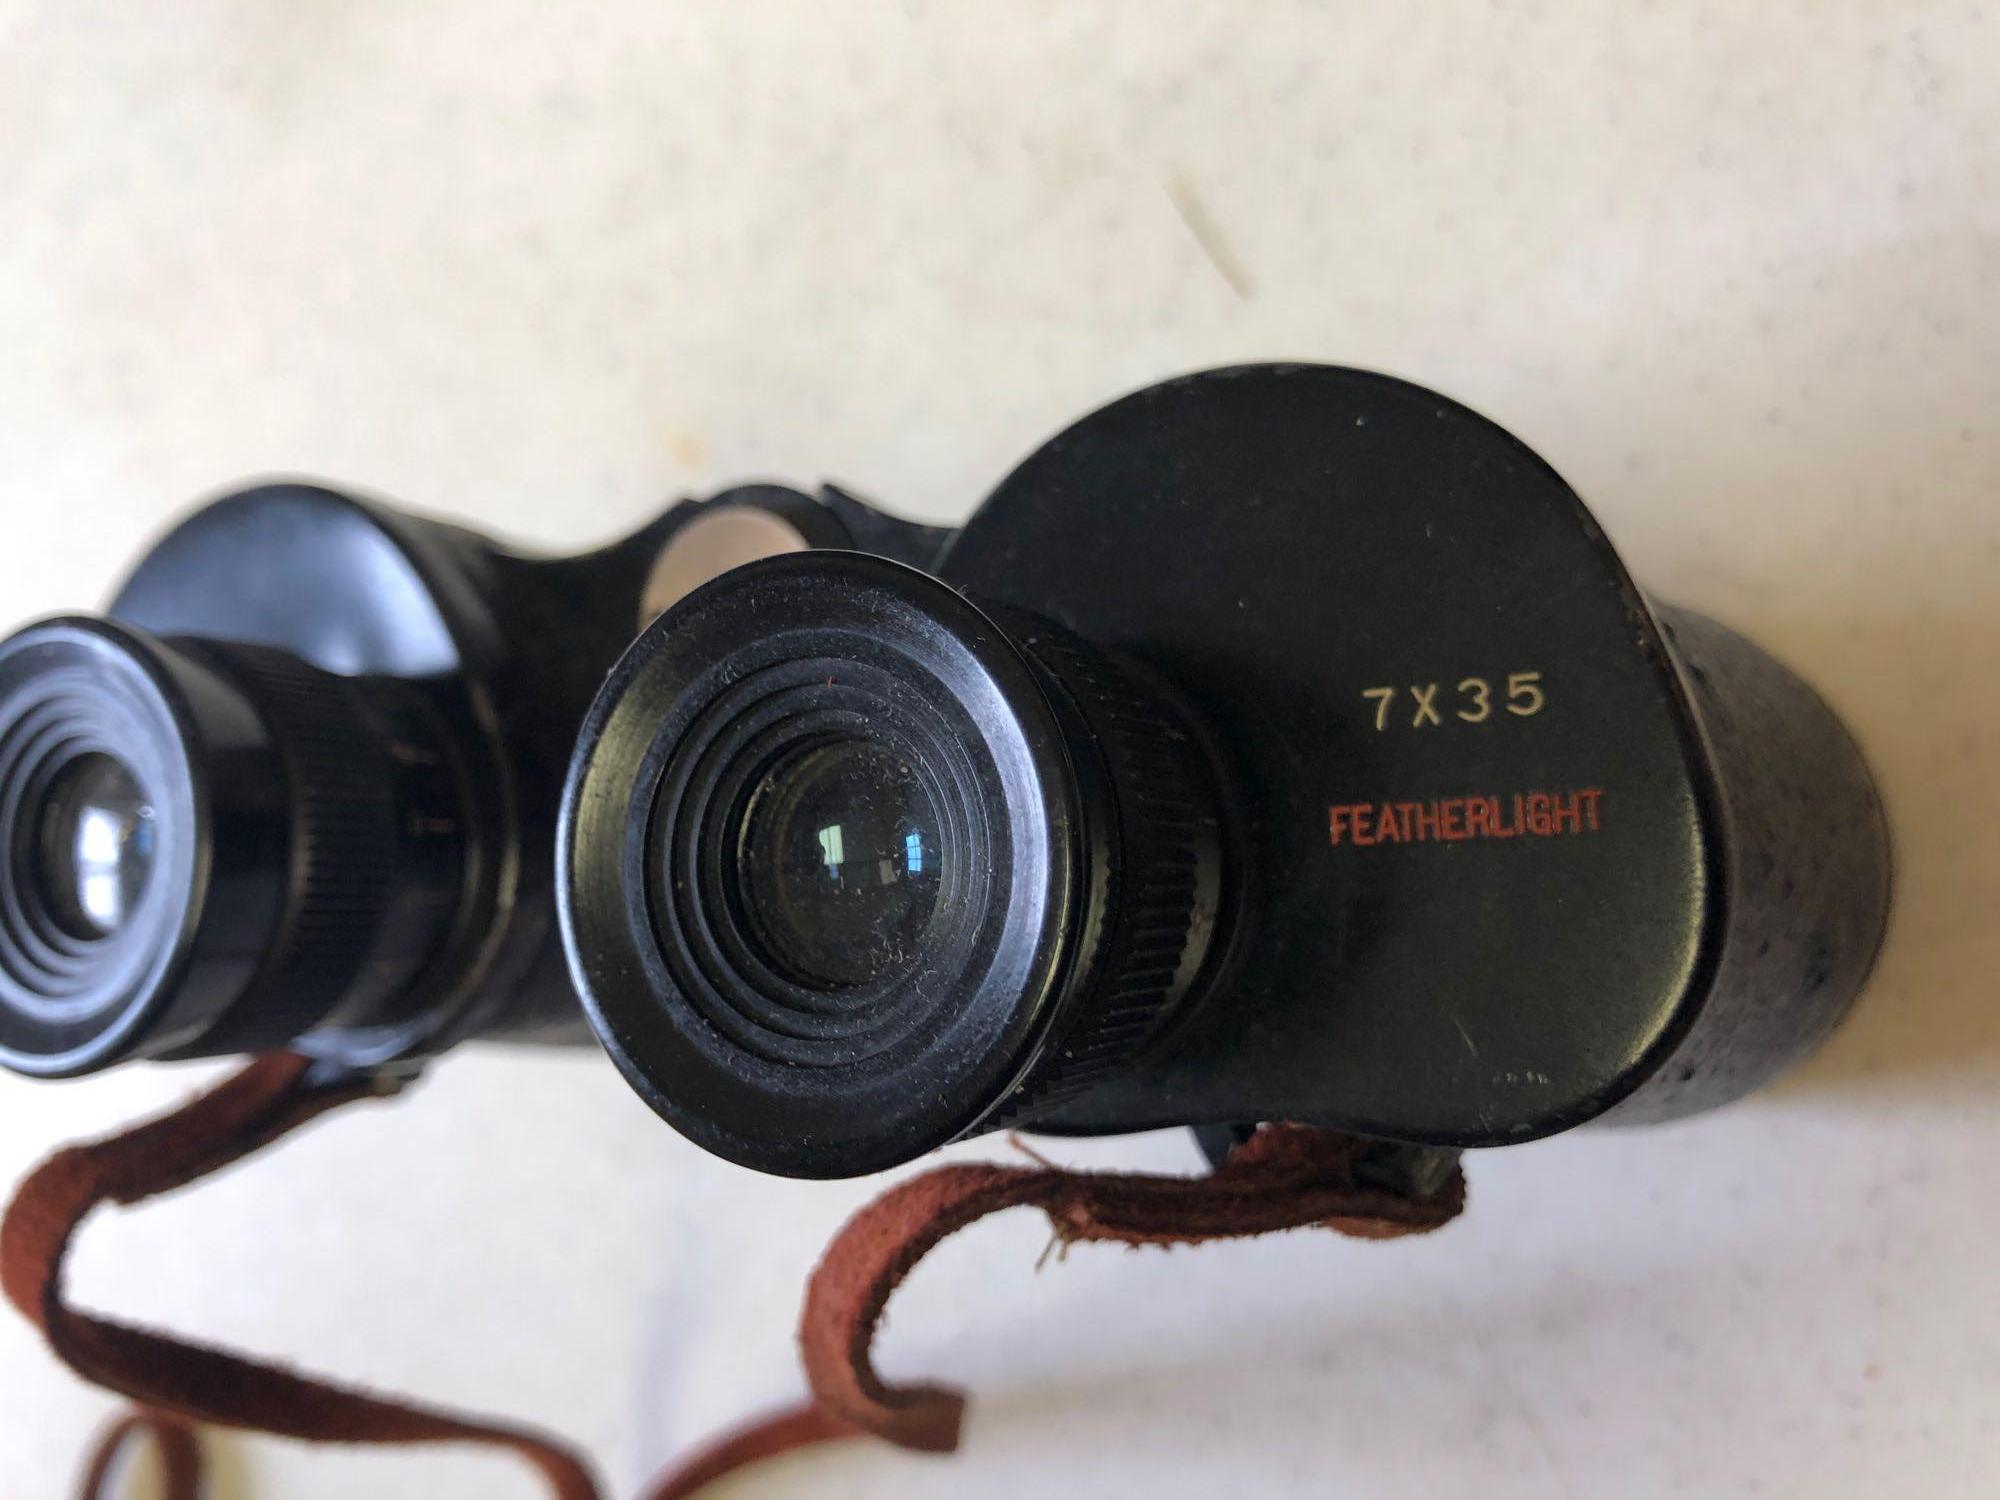 Bushnell Featherlight 7x35 Binoculars in case